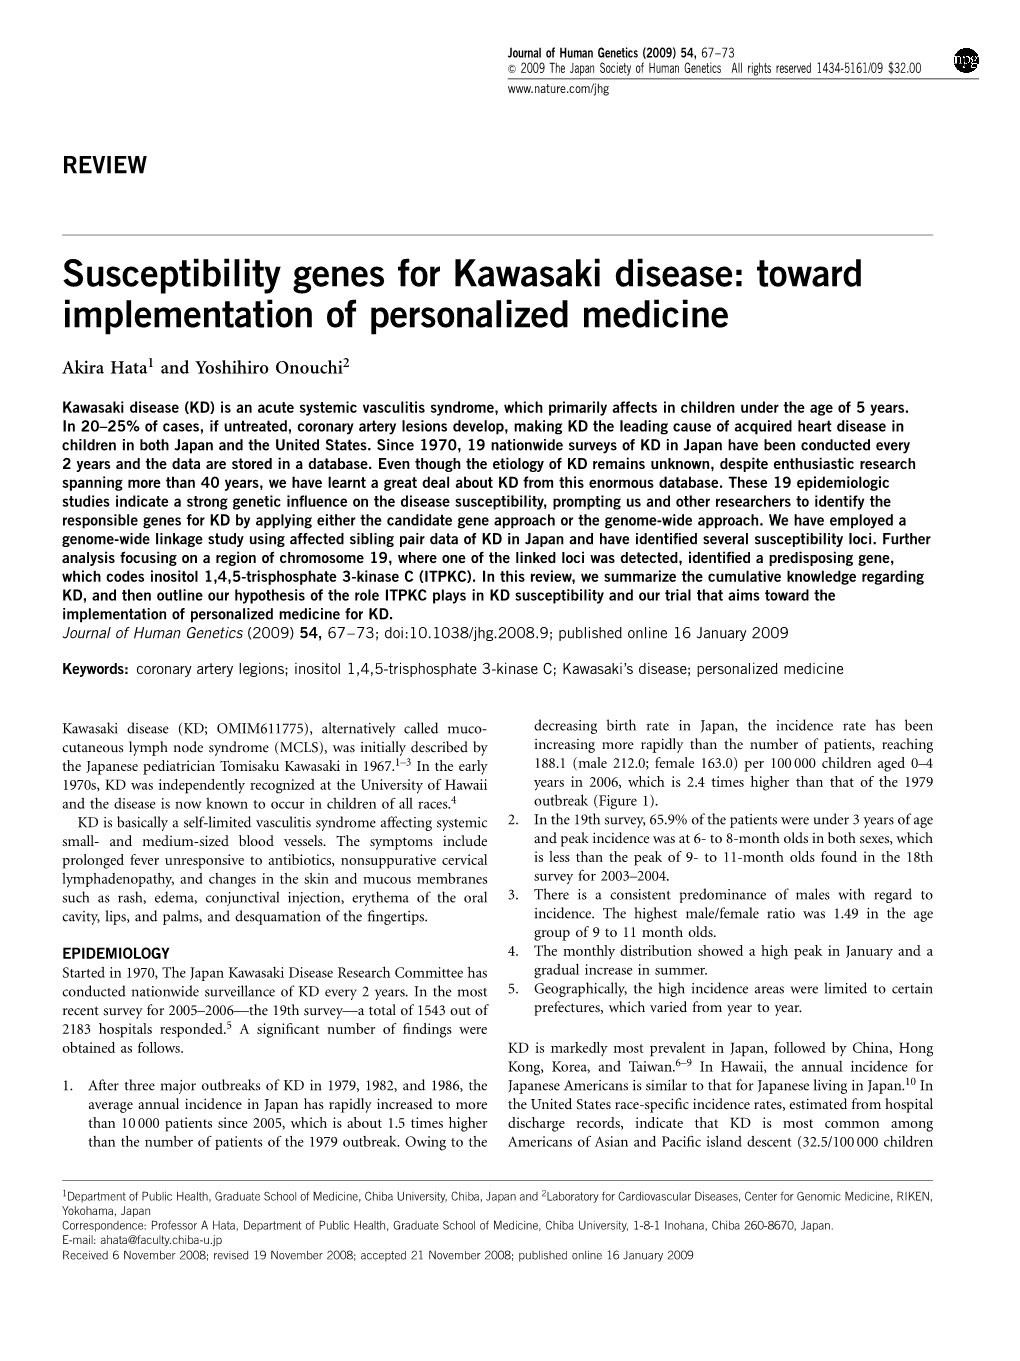 Susceptibility Genes for Kawasaki Disease: Toward Implementation of Personalized Medicine